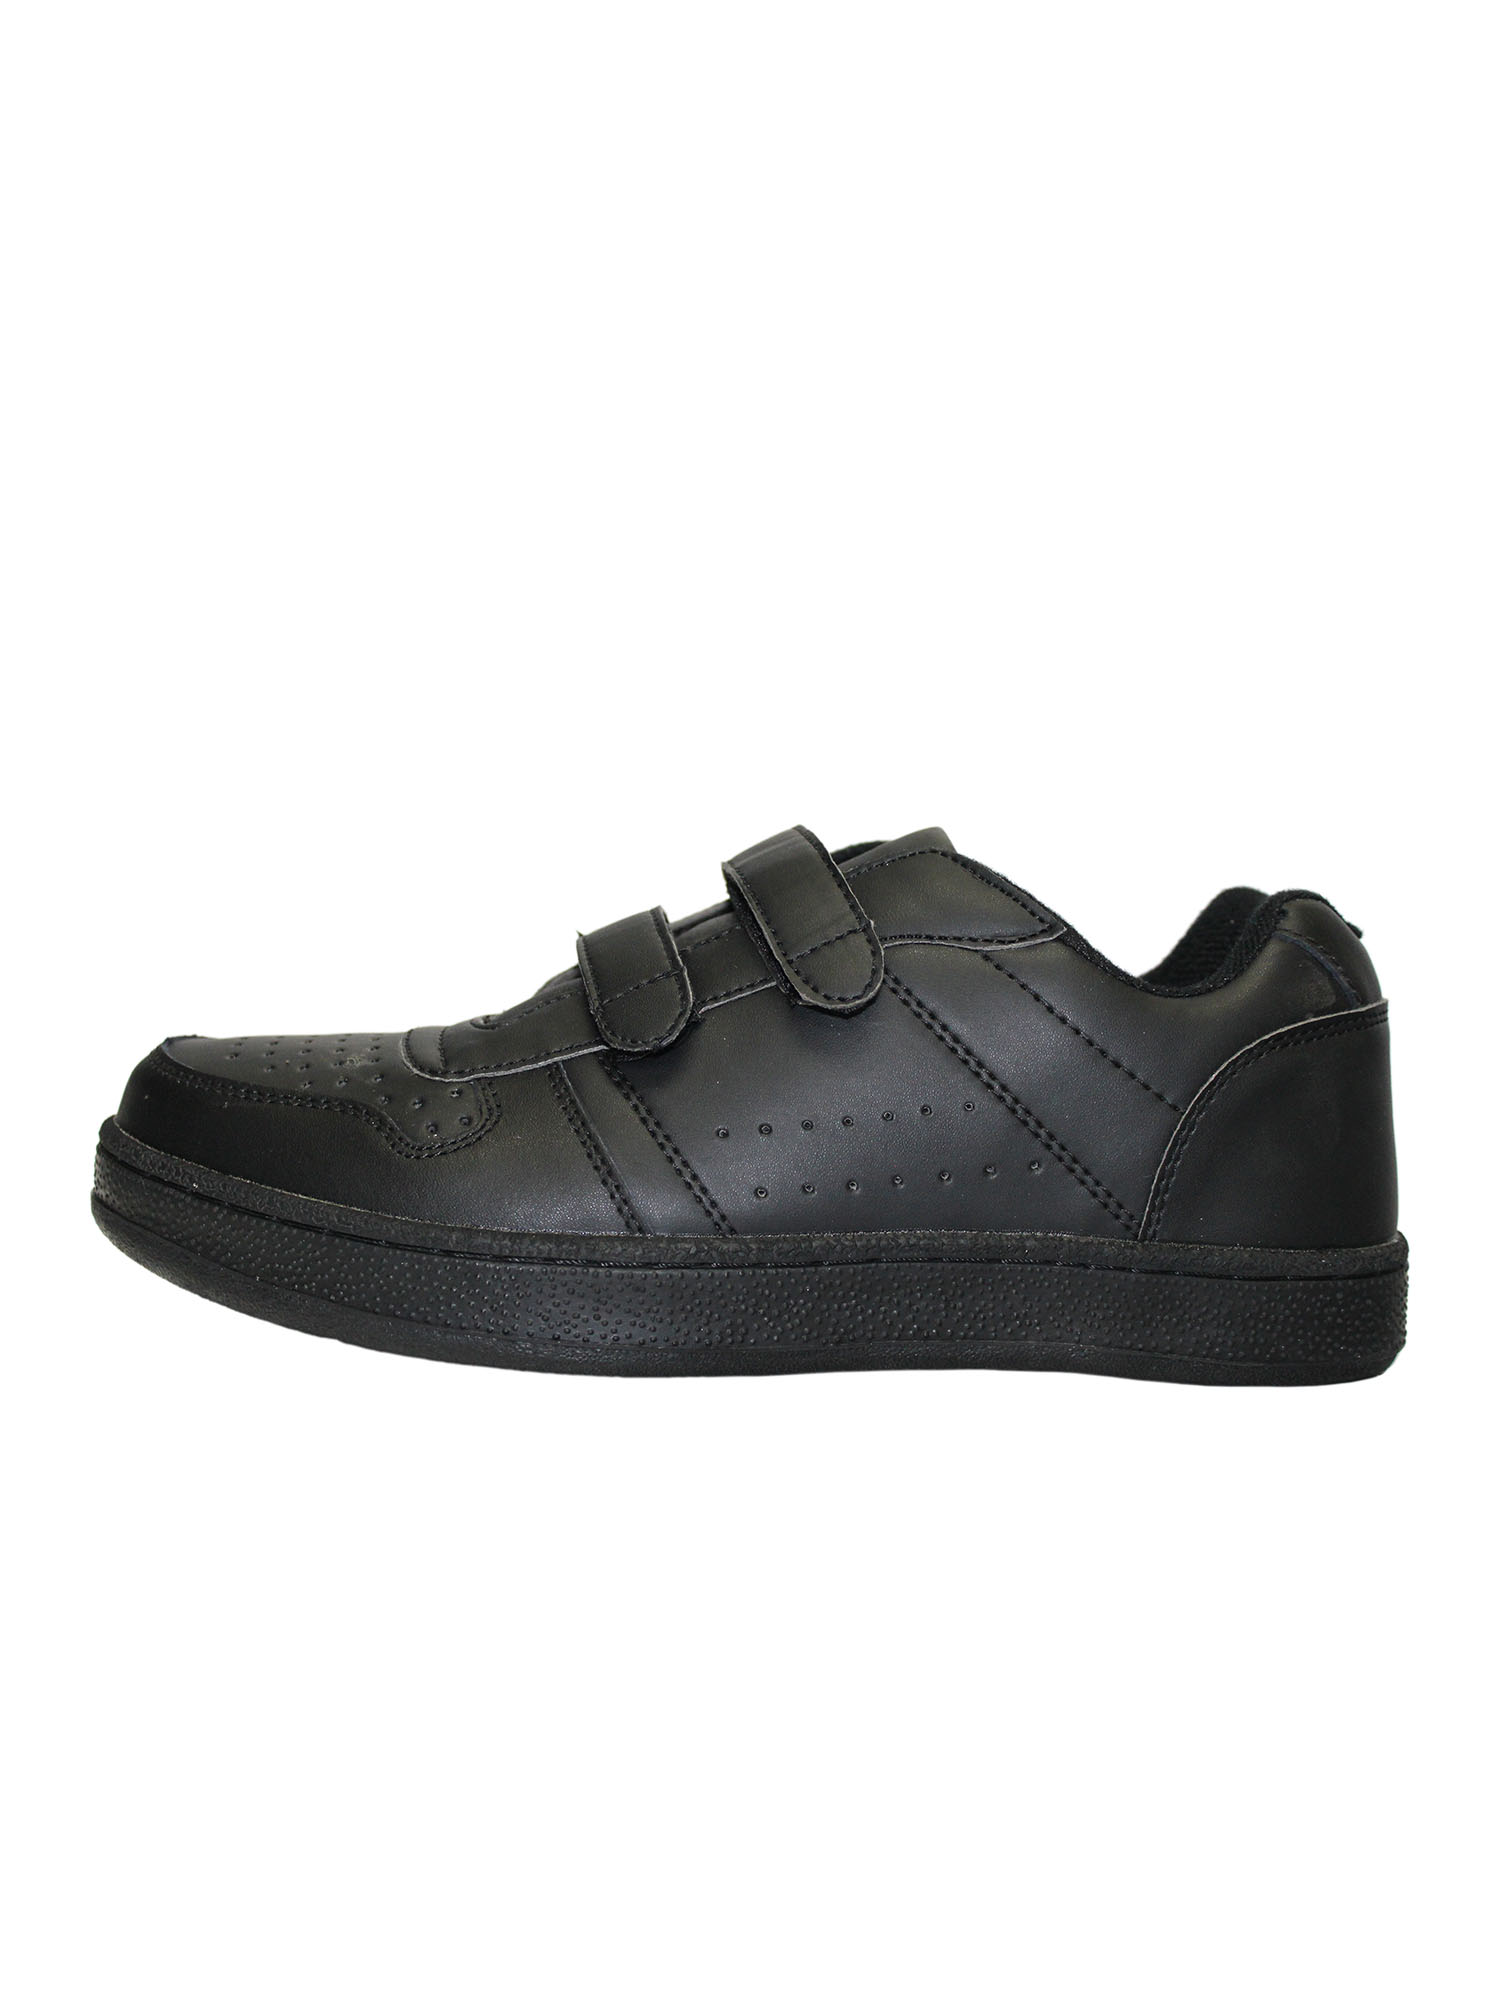 Tanleewa Men's Leather Strap Sneakers Lightweight Hook and Loop Walking Shoe Size 7 Adult Male - image 2 of 4